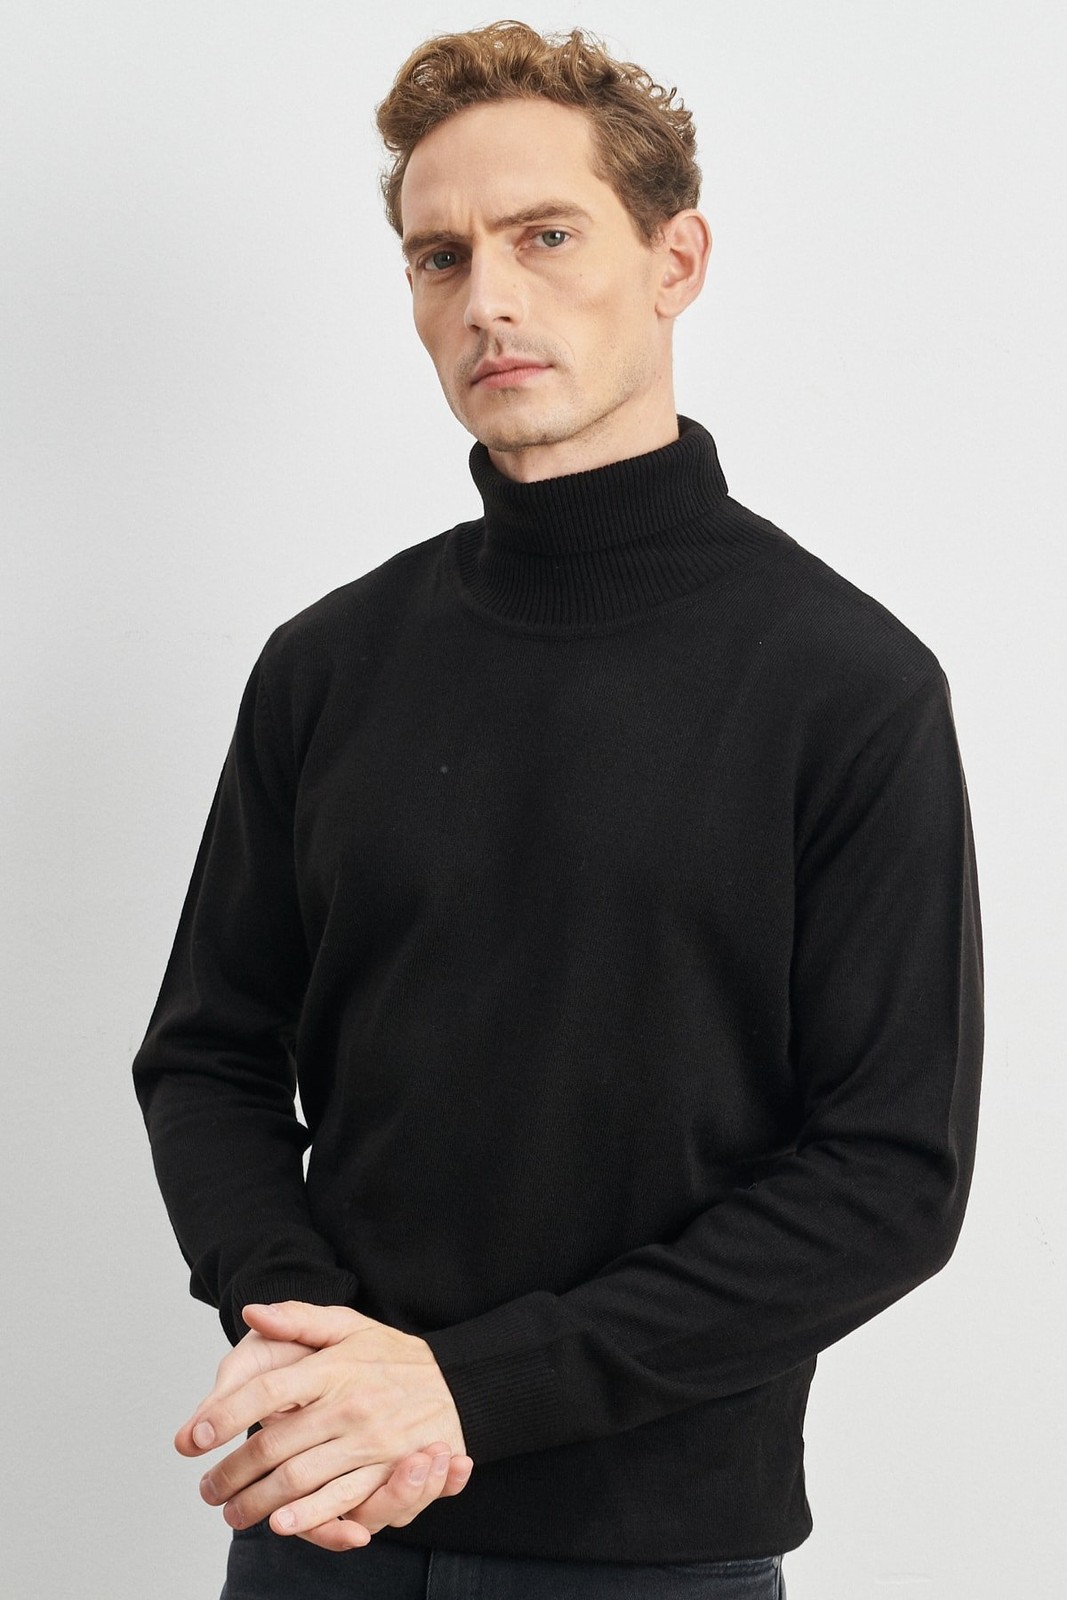 ALTINYILDIZ CLASSICS Men's Black Anti-Pilling, Anti-Pilling Feature Standard Fit Full Turtleneck Knitwear Sweater.